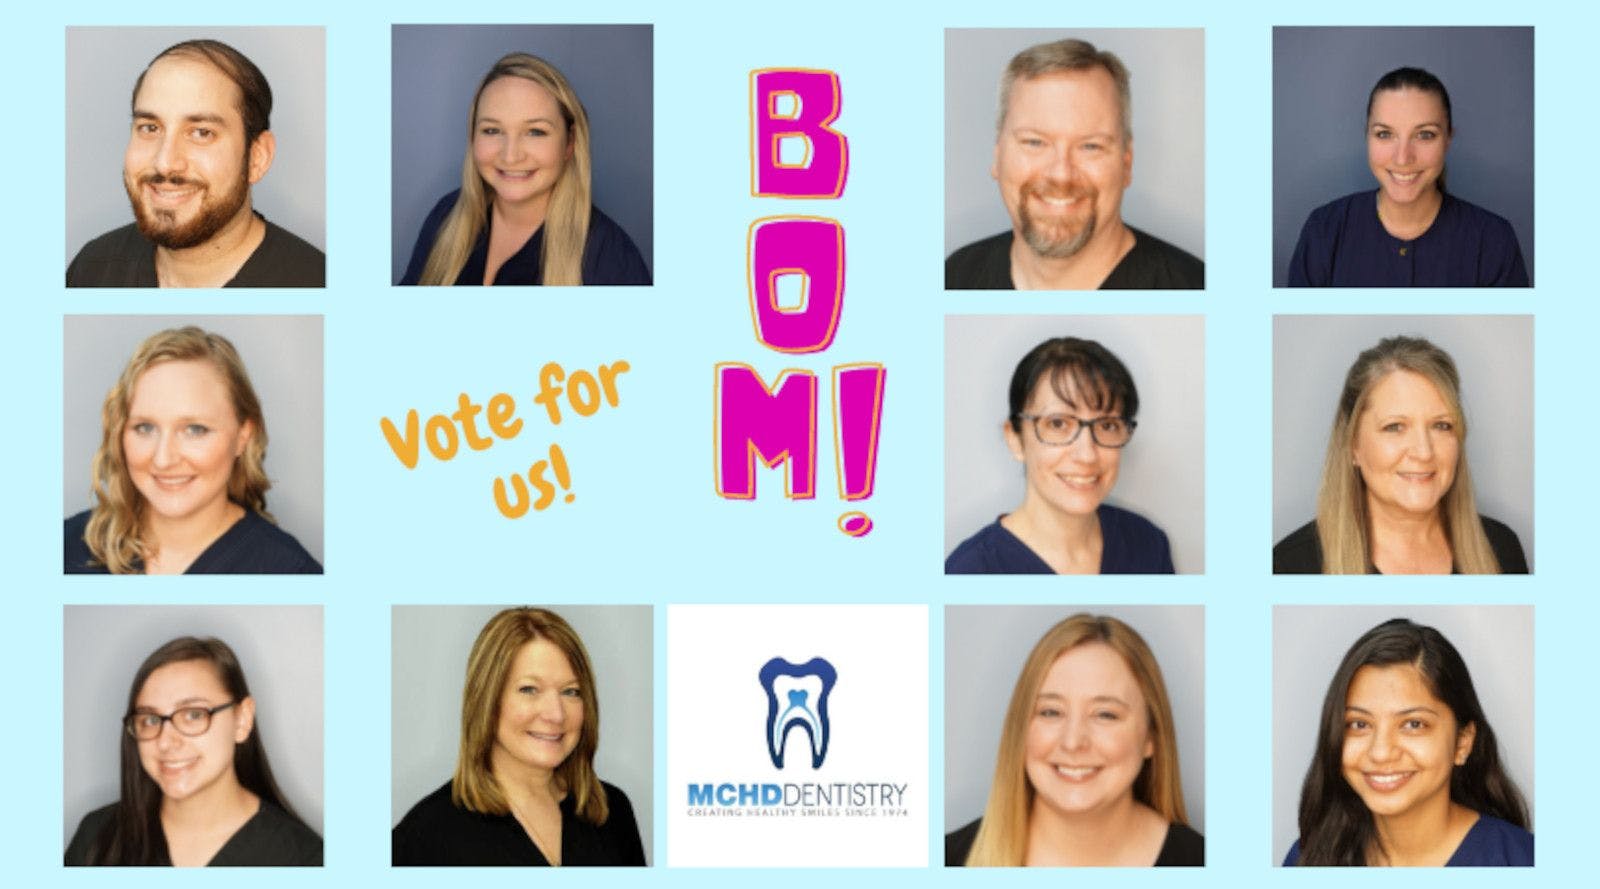 MCHD Dentistry is the BOM!